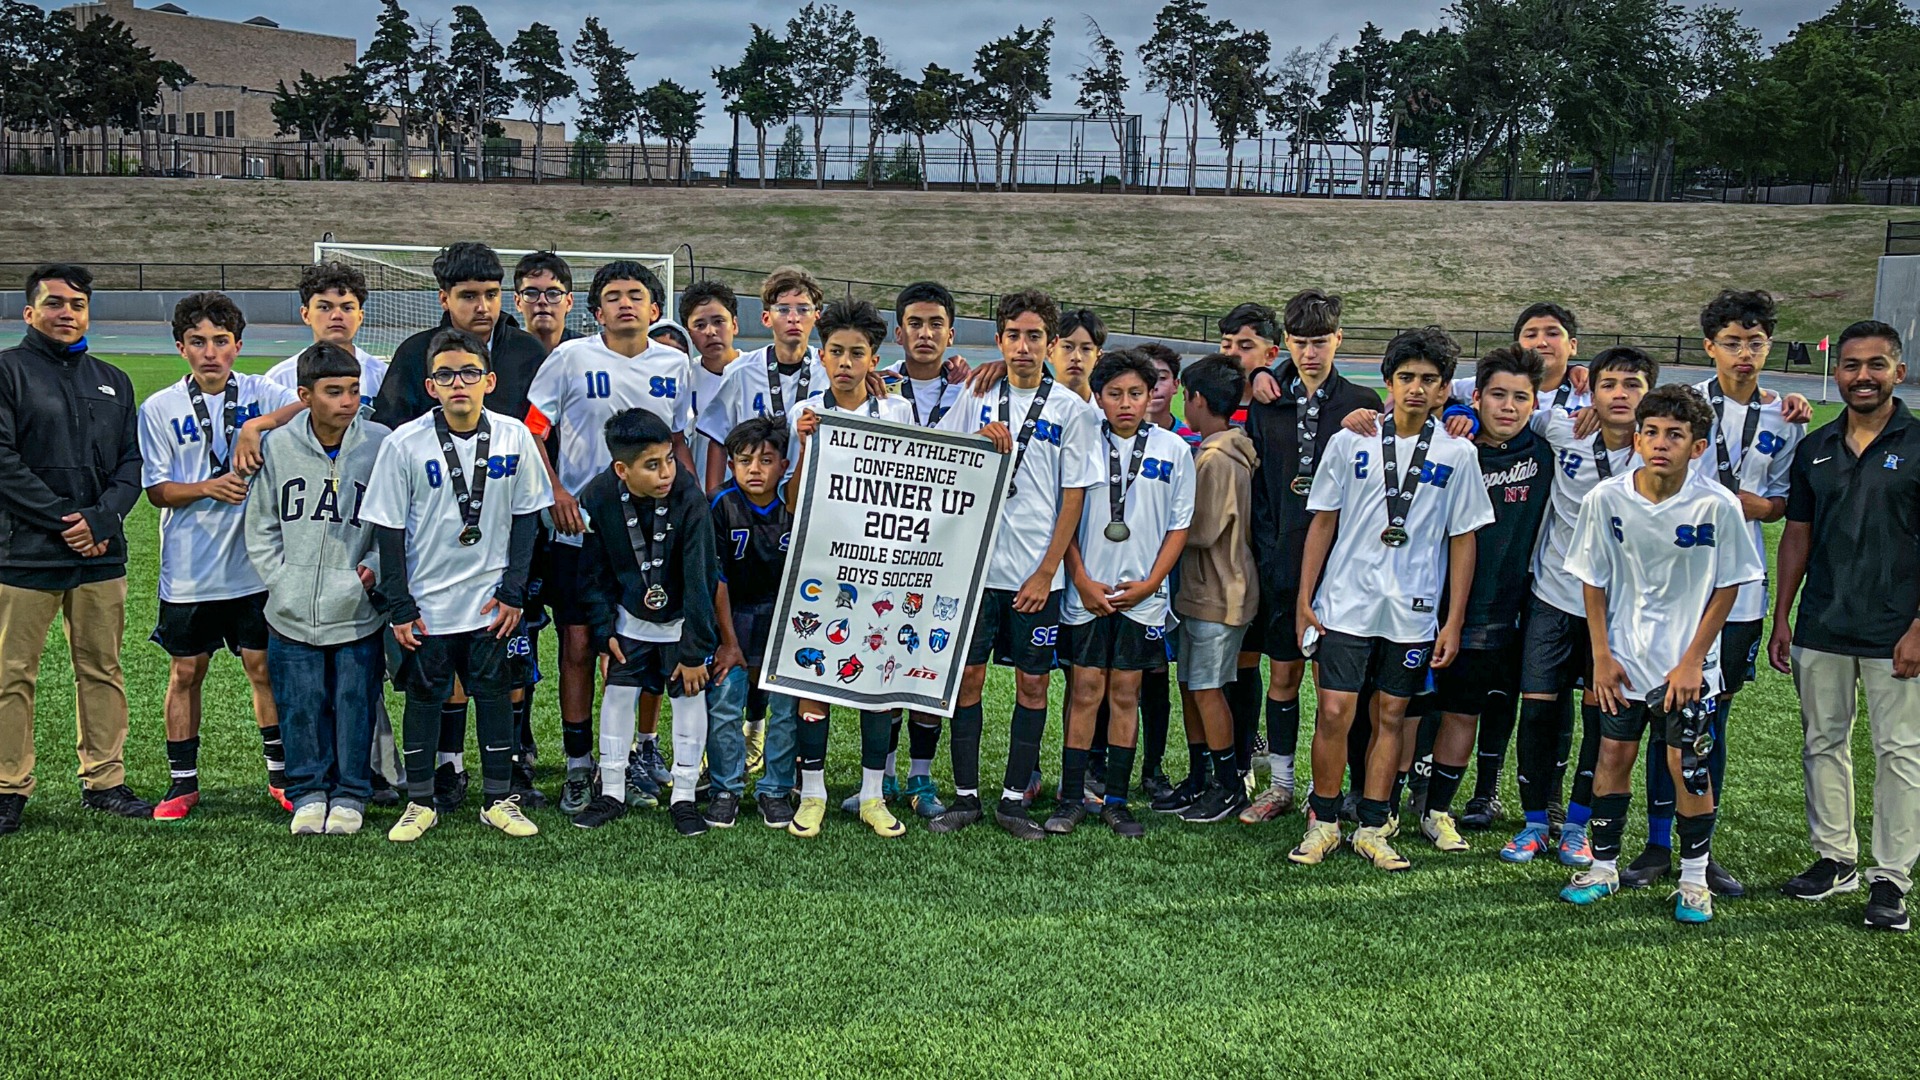 Slide 0 - Spartans' Soccer Receive ACAC Runner-Up Banner